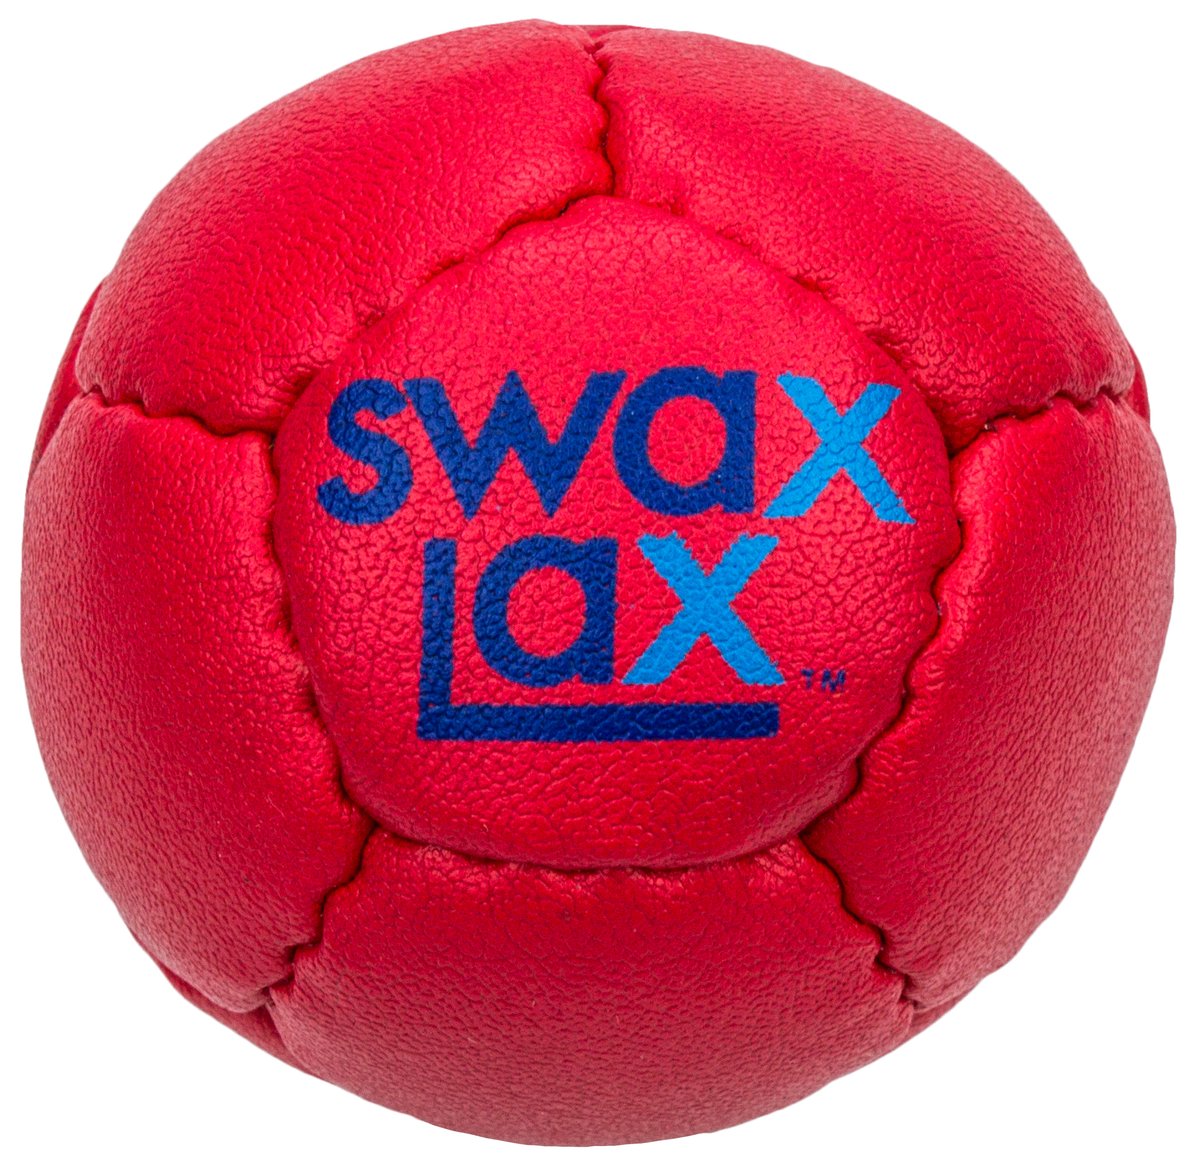 swax-lax-original-training-ball-red